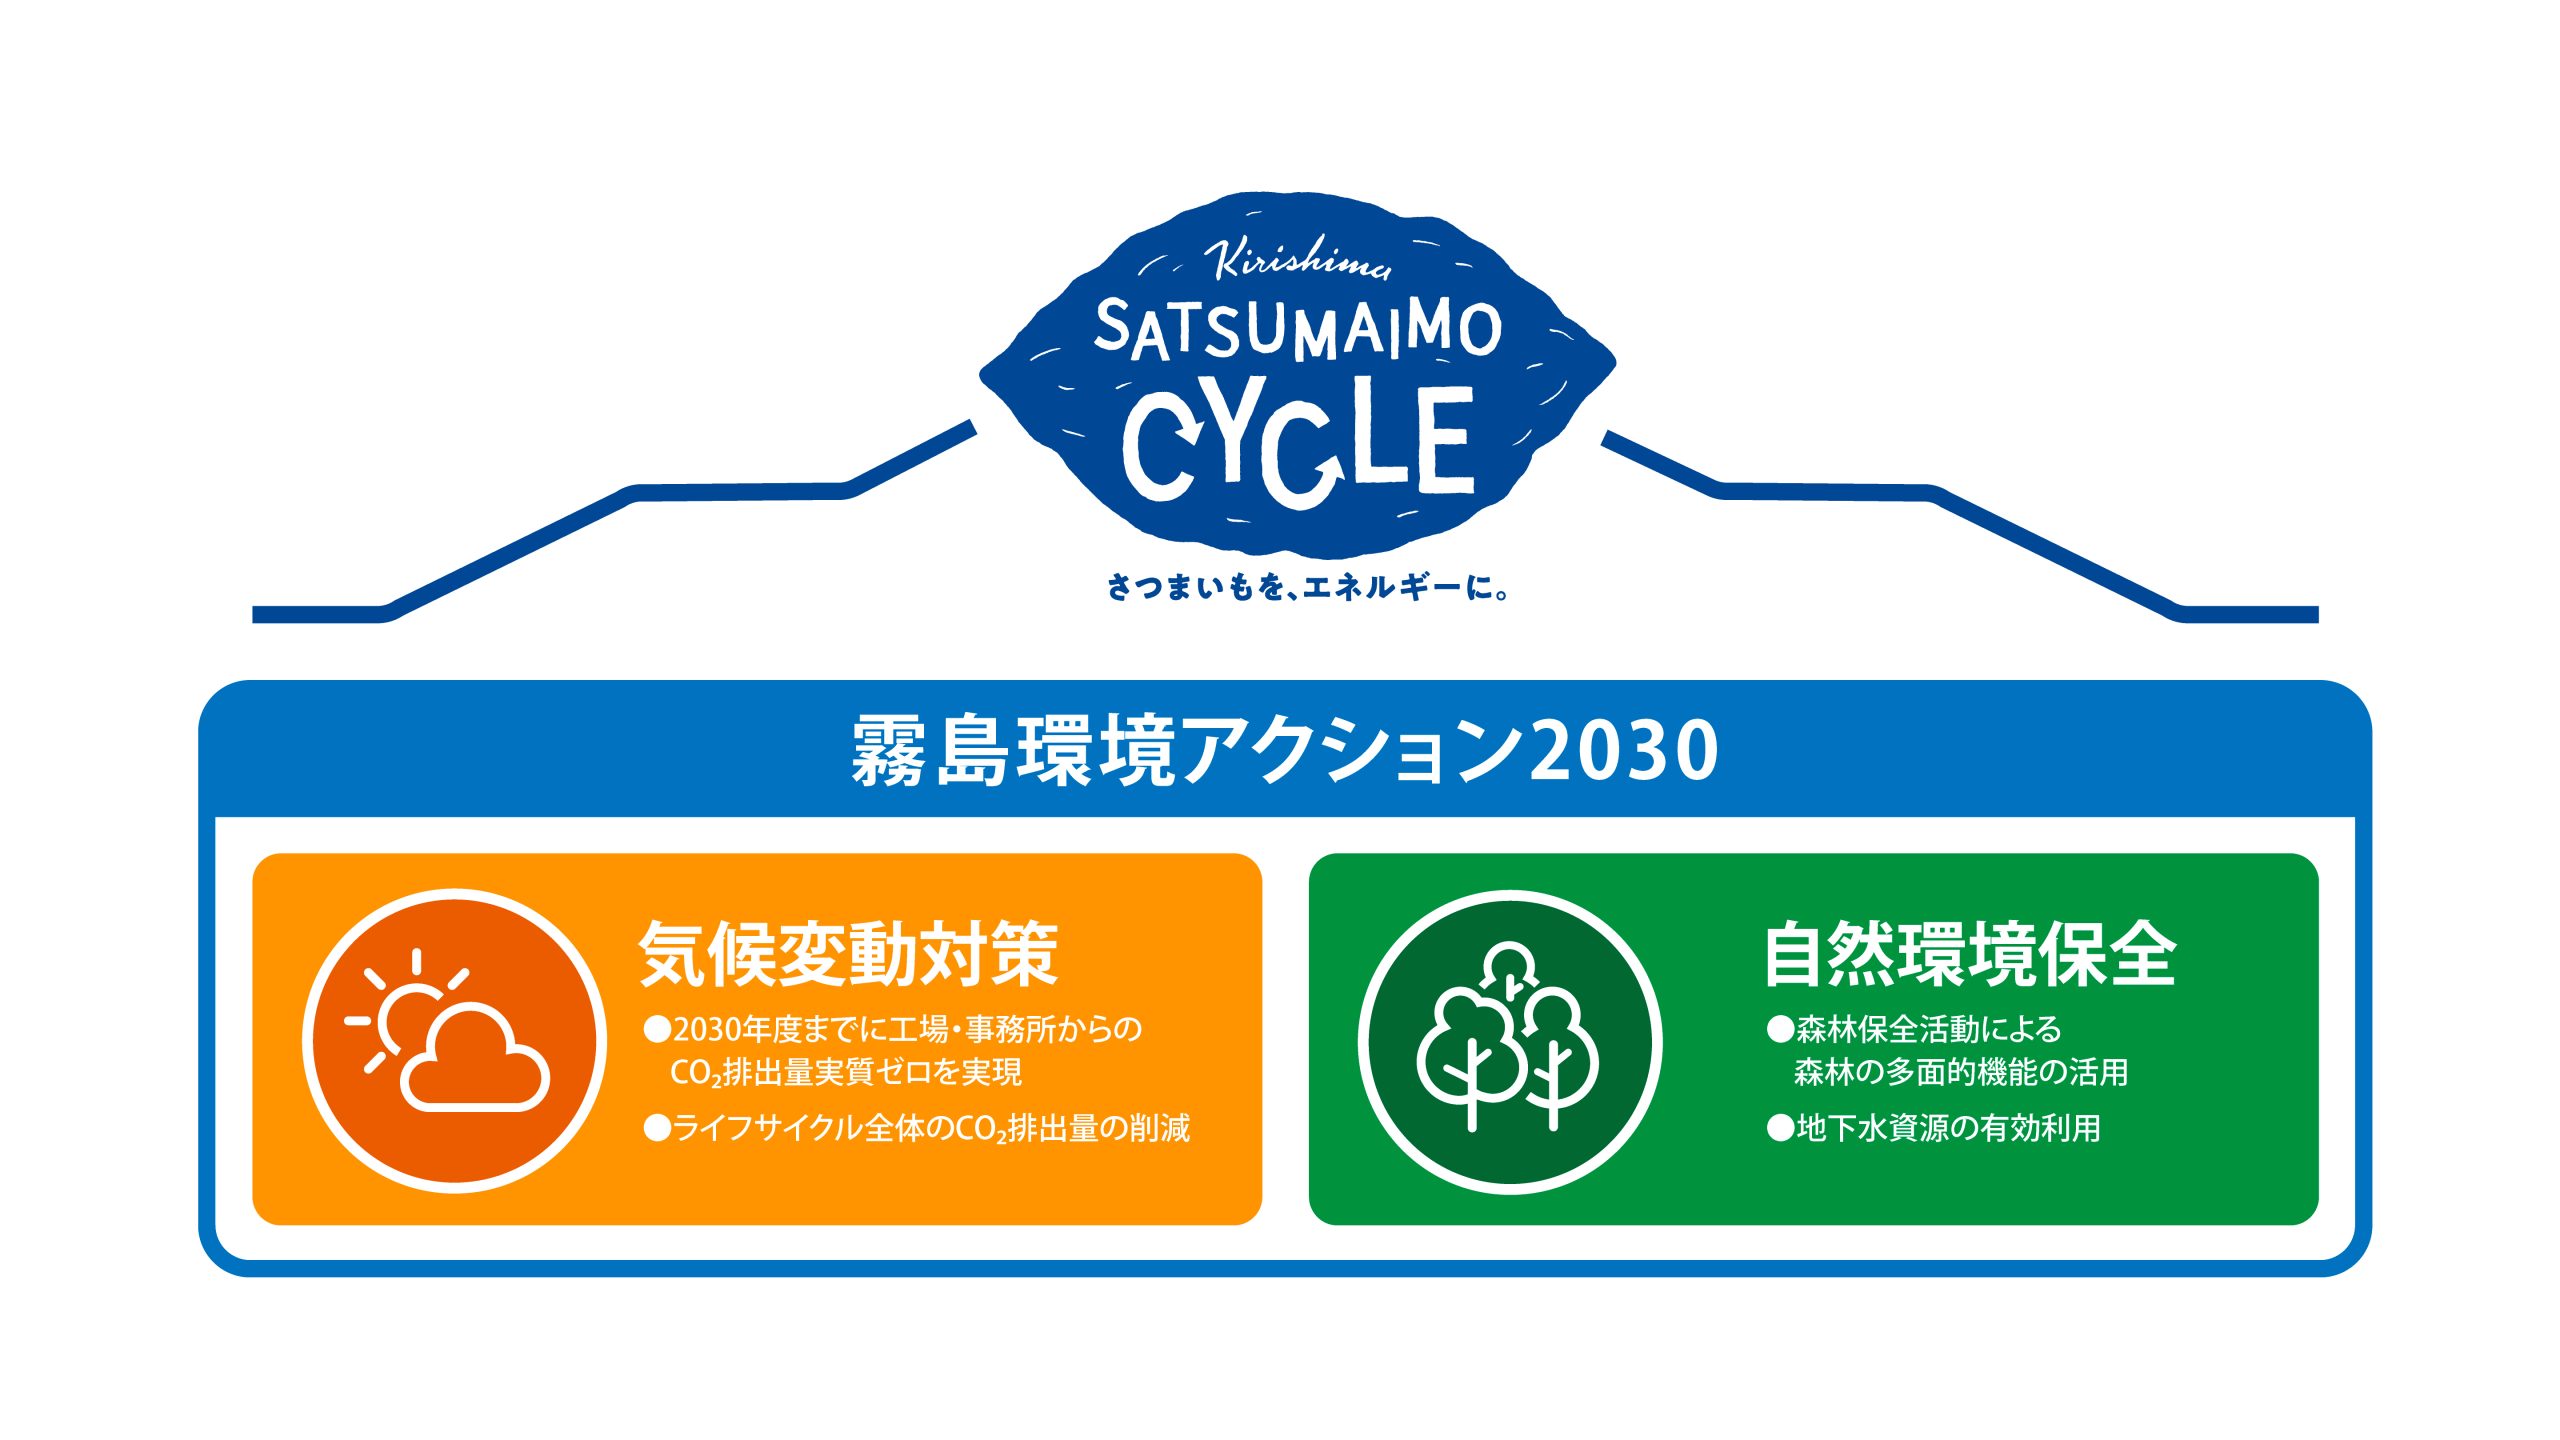 『KIRISHIMA SATSUMAIMO CYCLE～さつまいもを、エネルギーに。～』の実現に向けて『霧島環境アクション2030』を策定